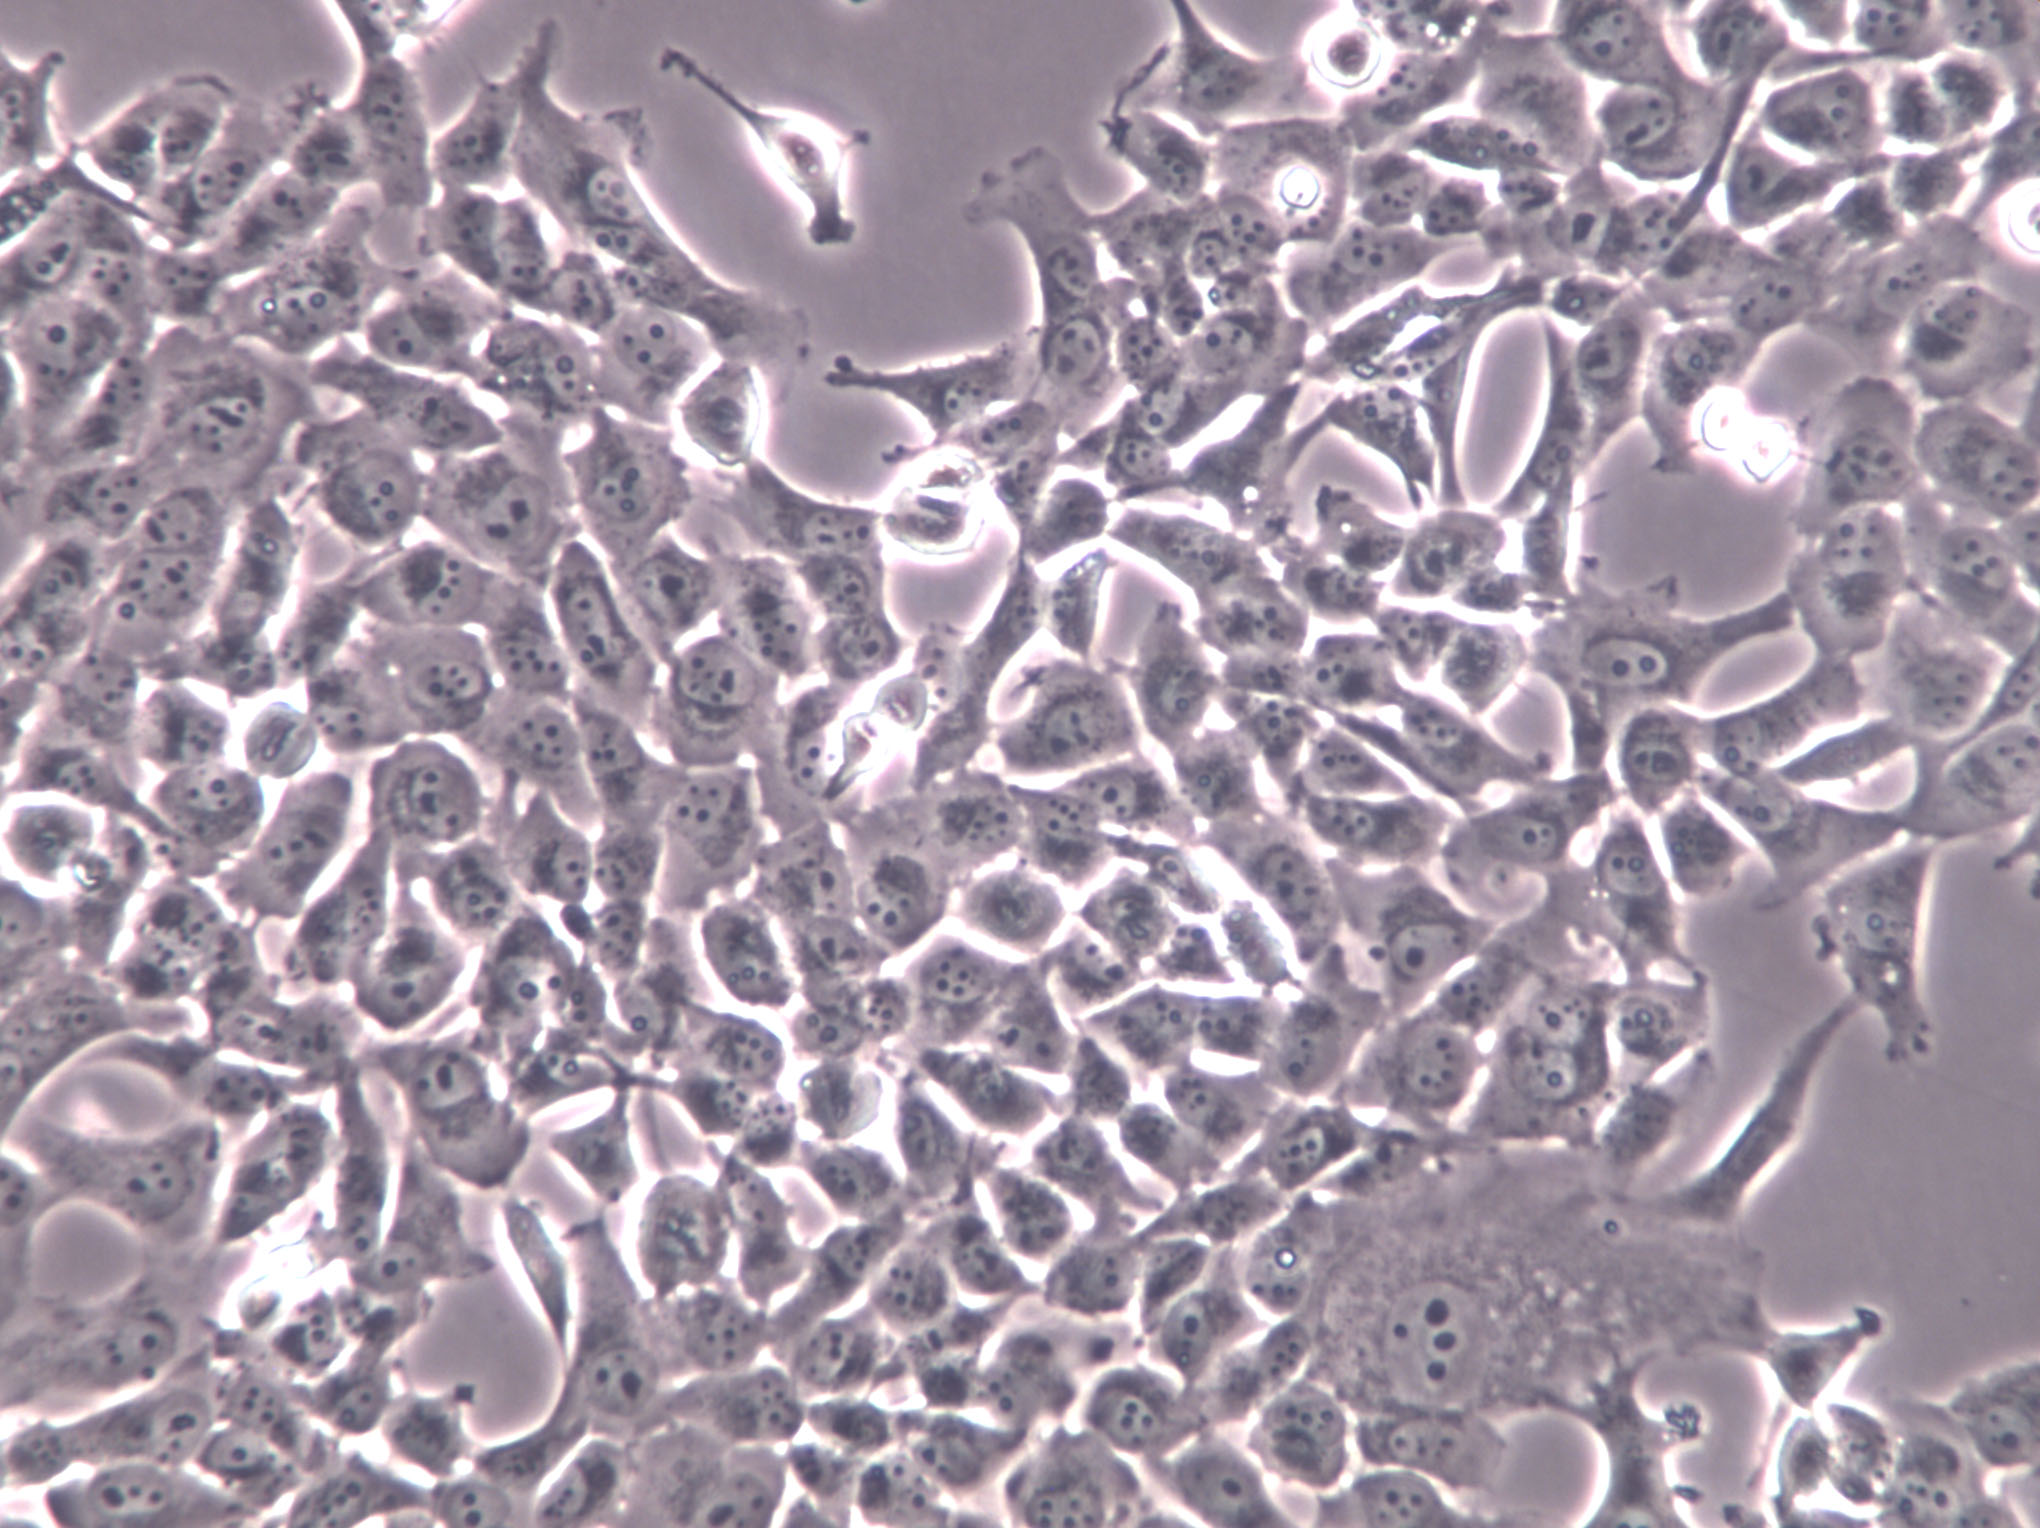 U-373MG ATCC Cells|人胶质瘤克隆细胞,U-373MG ATCC Cells